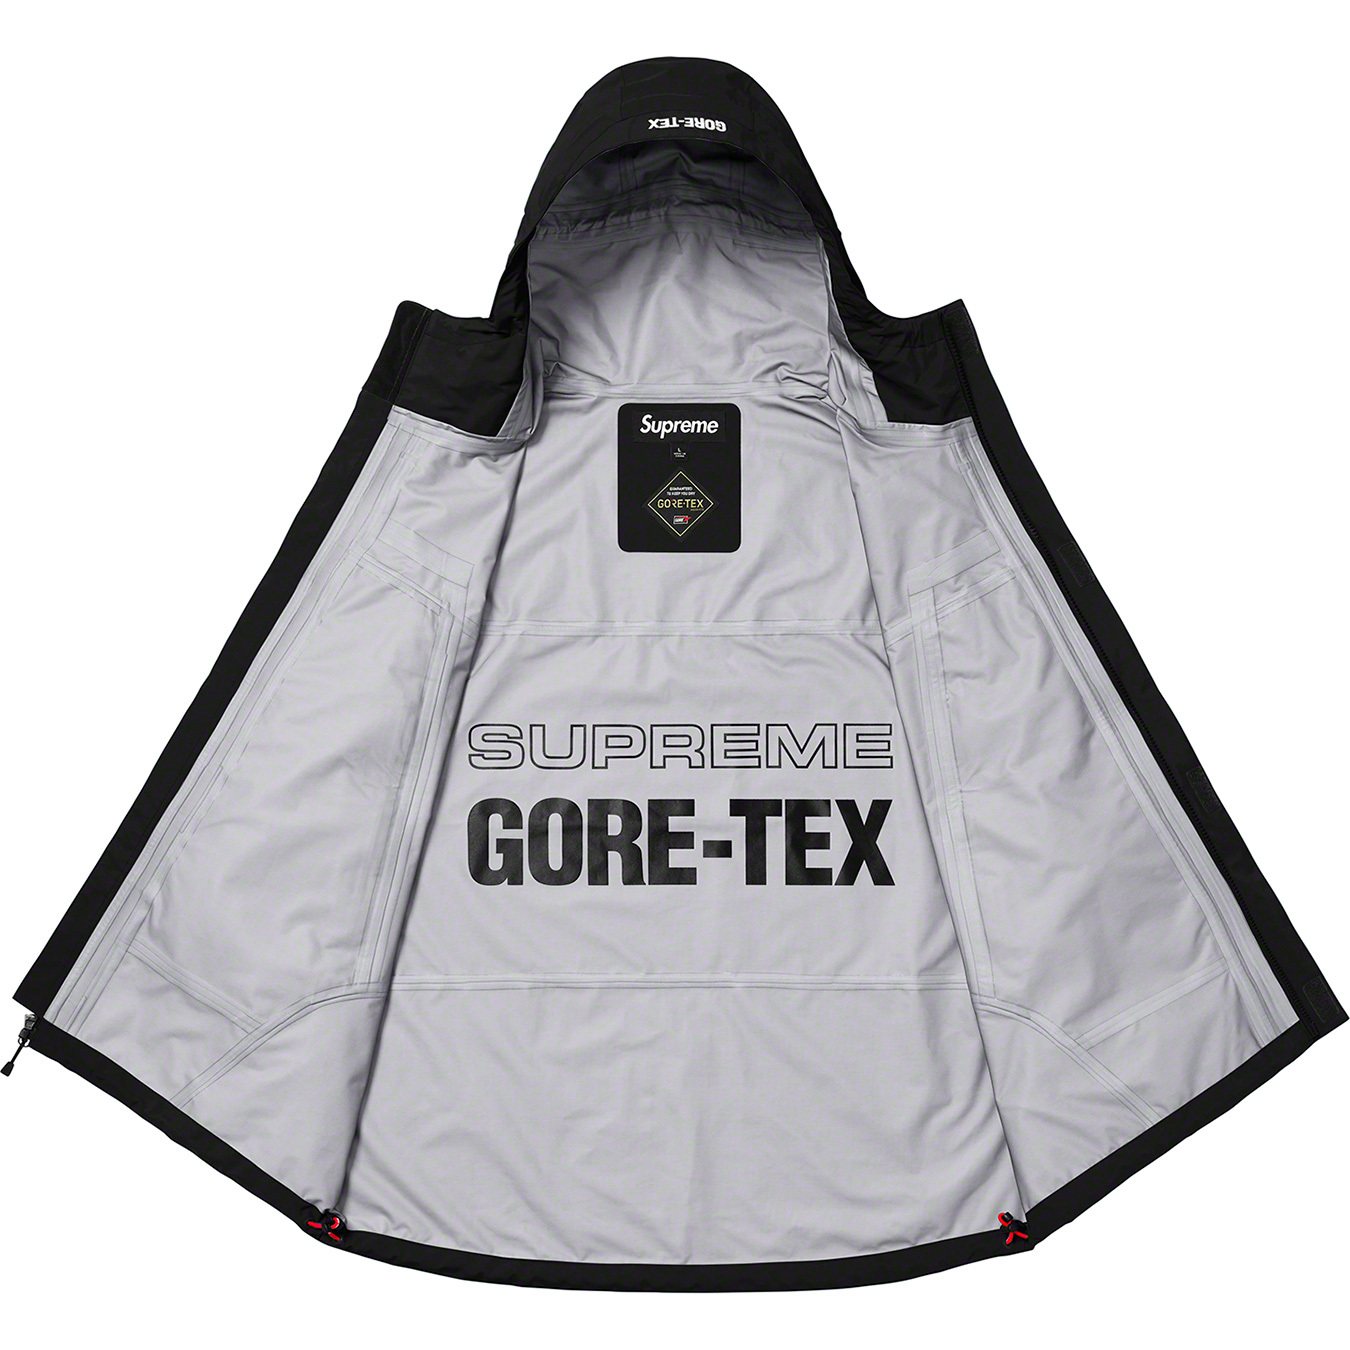 GORE-TEX Taped Seam Jacket - Supreme Community